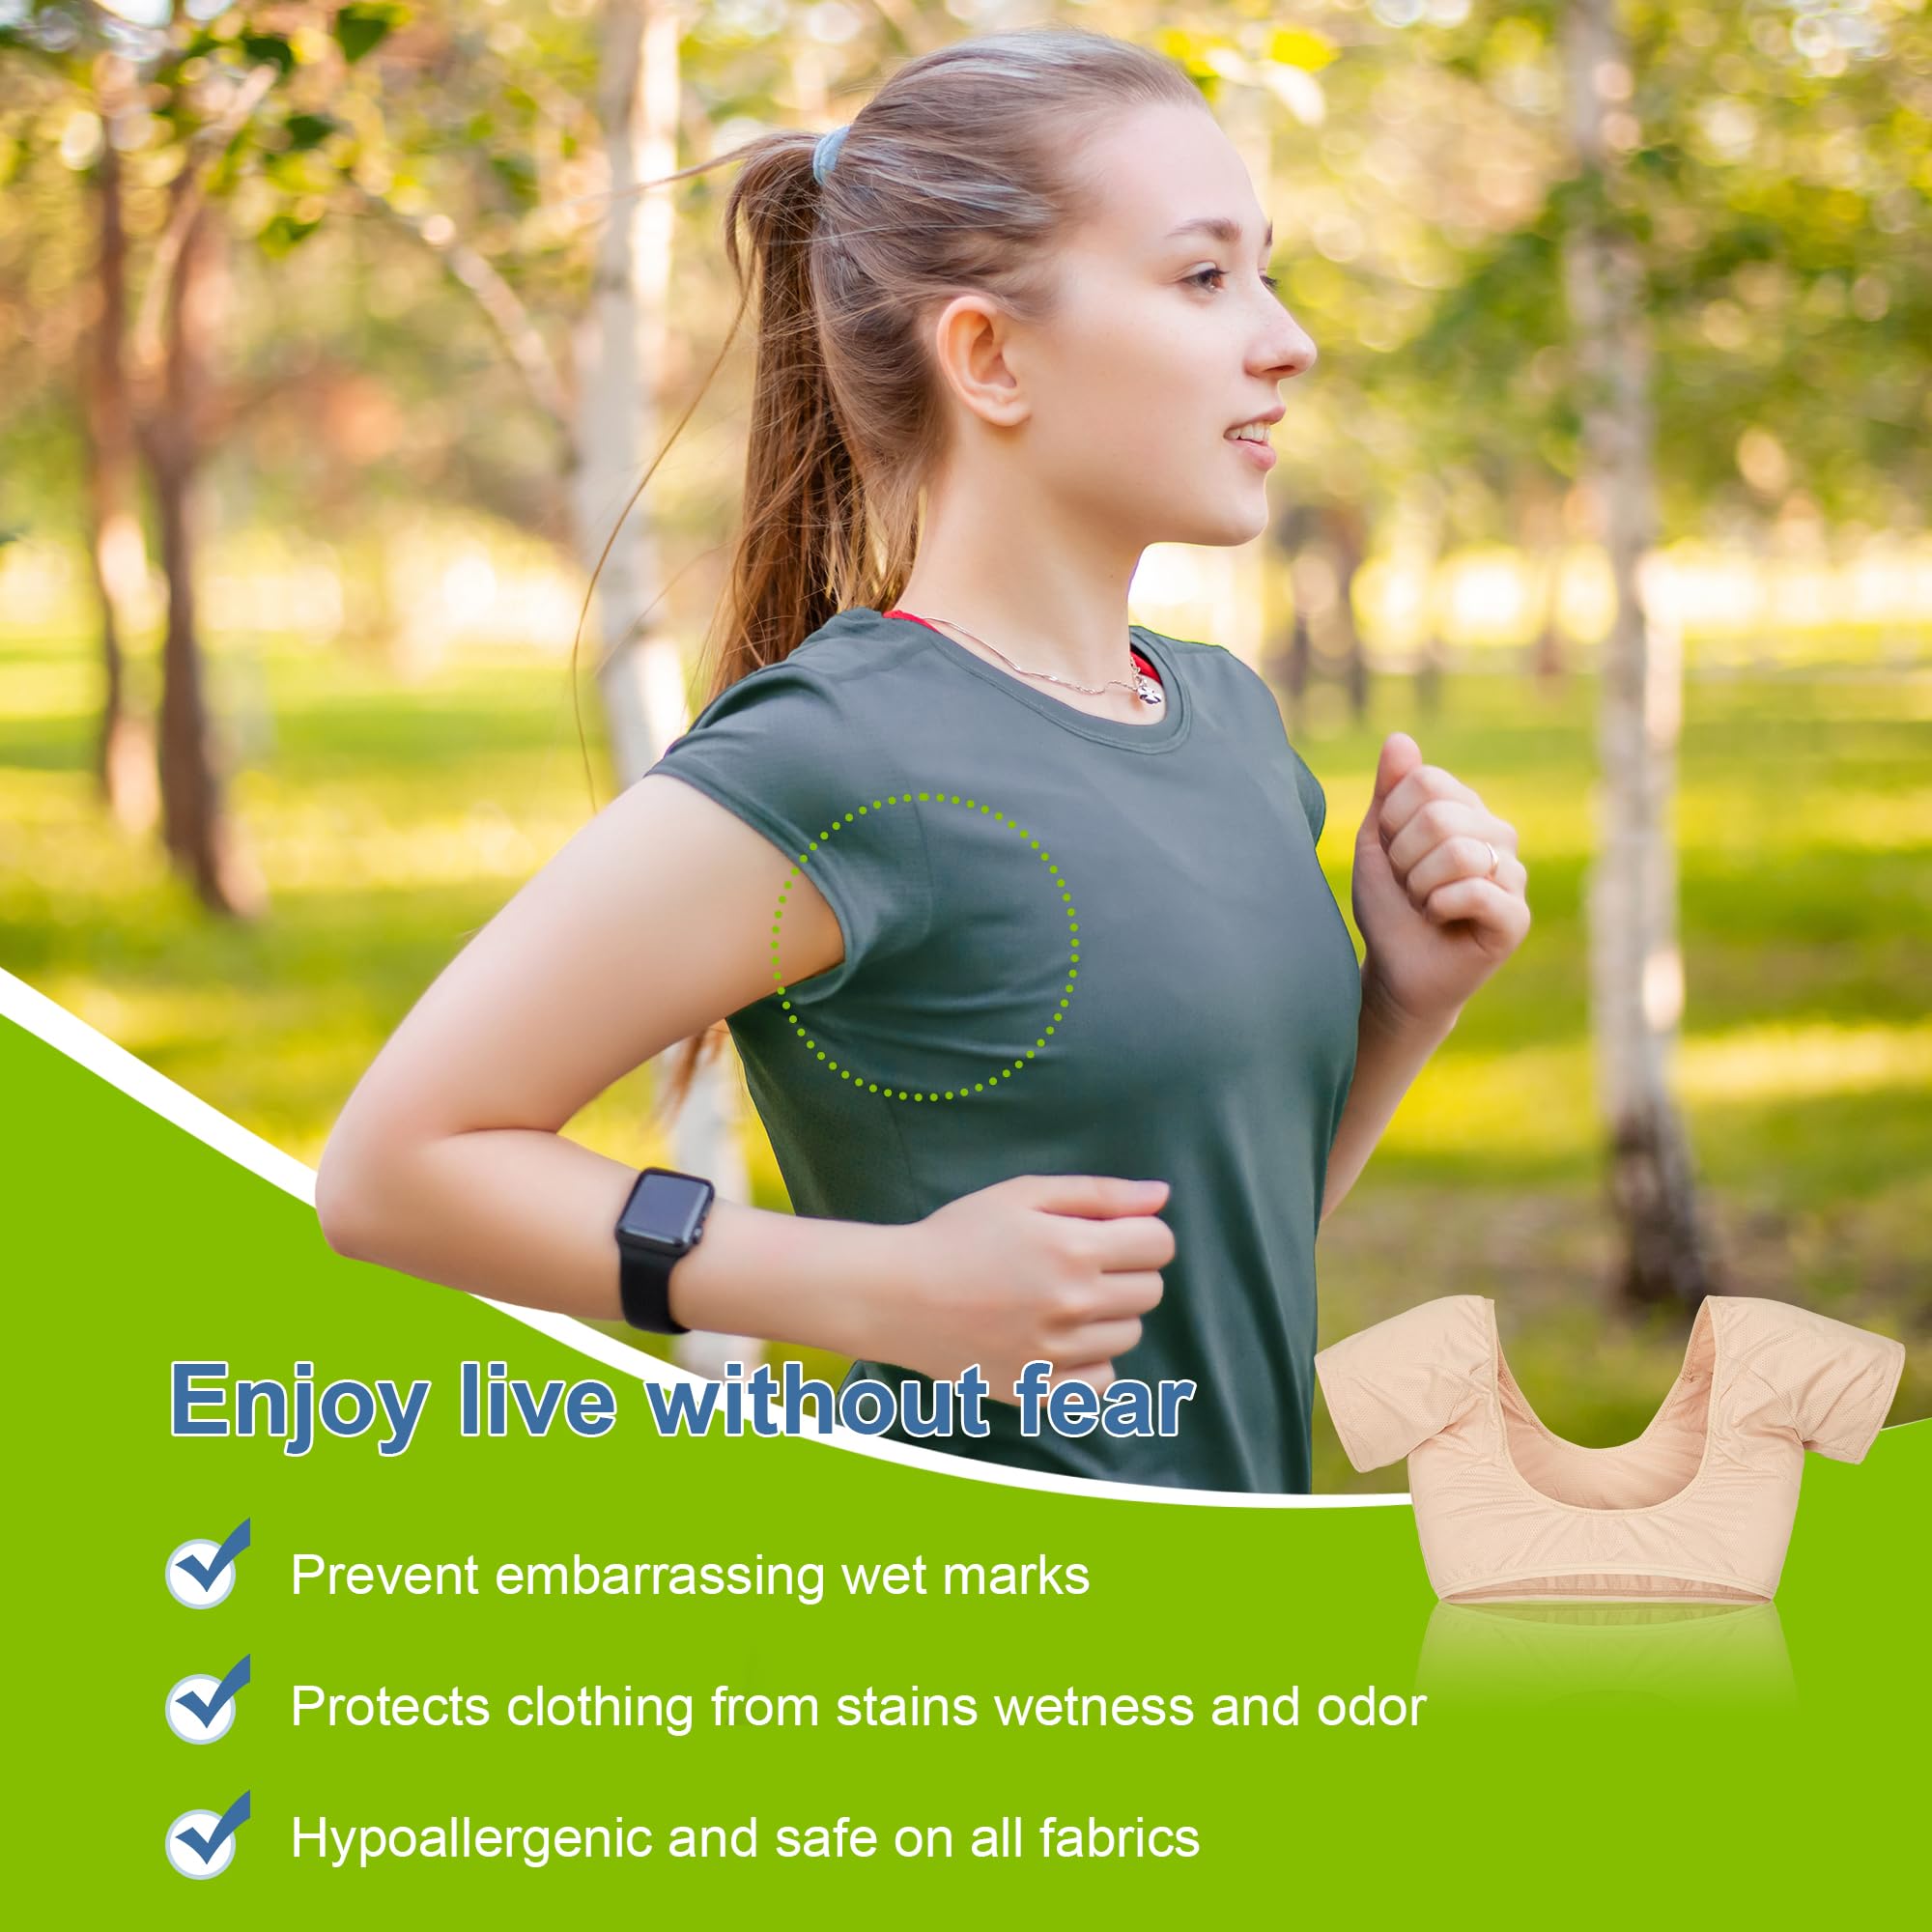 Cosybaby 3 pcs Armpit Sweat Pads -Underarm Sweat Pads Vest Breathable & Washable Sweat Pads for Women Armpits, Premium Quality Fight Hyperhidrosis Armpit Pads for Women, Black/White/Beige,Large